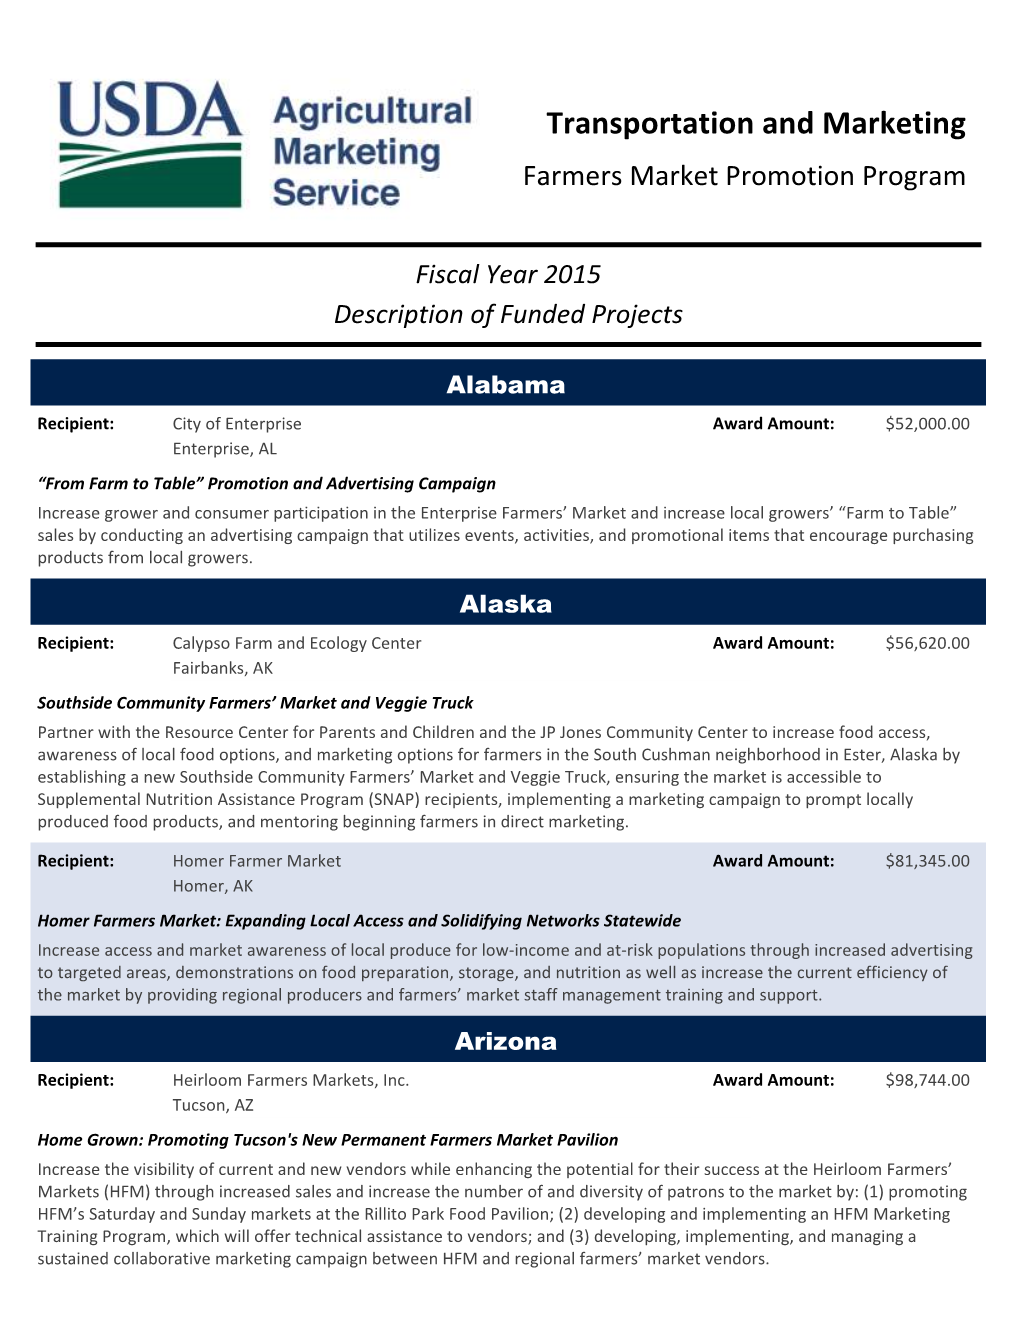 Transportation and Marketing Farmers Market Promotion Program